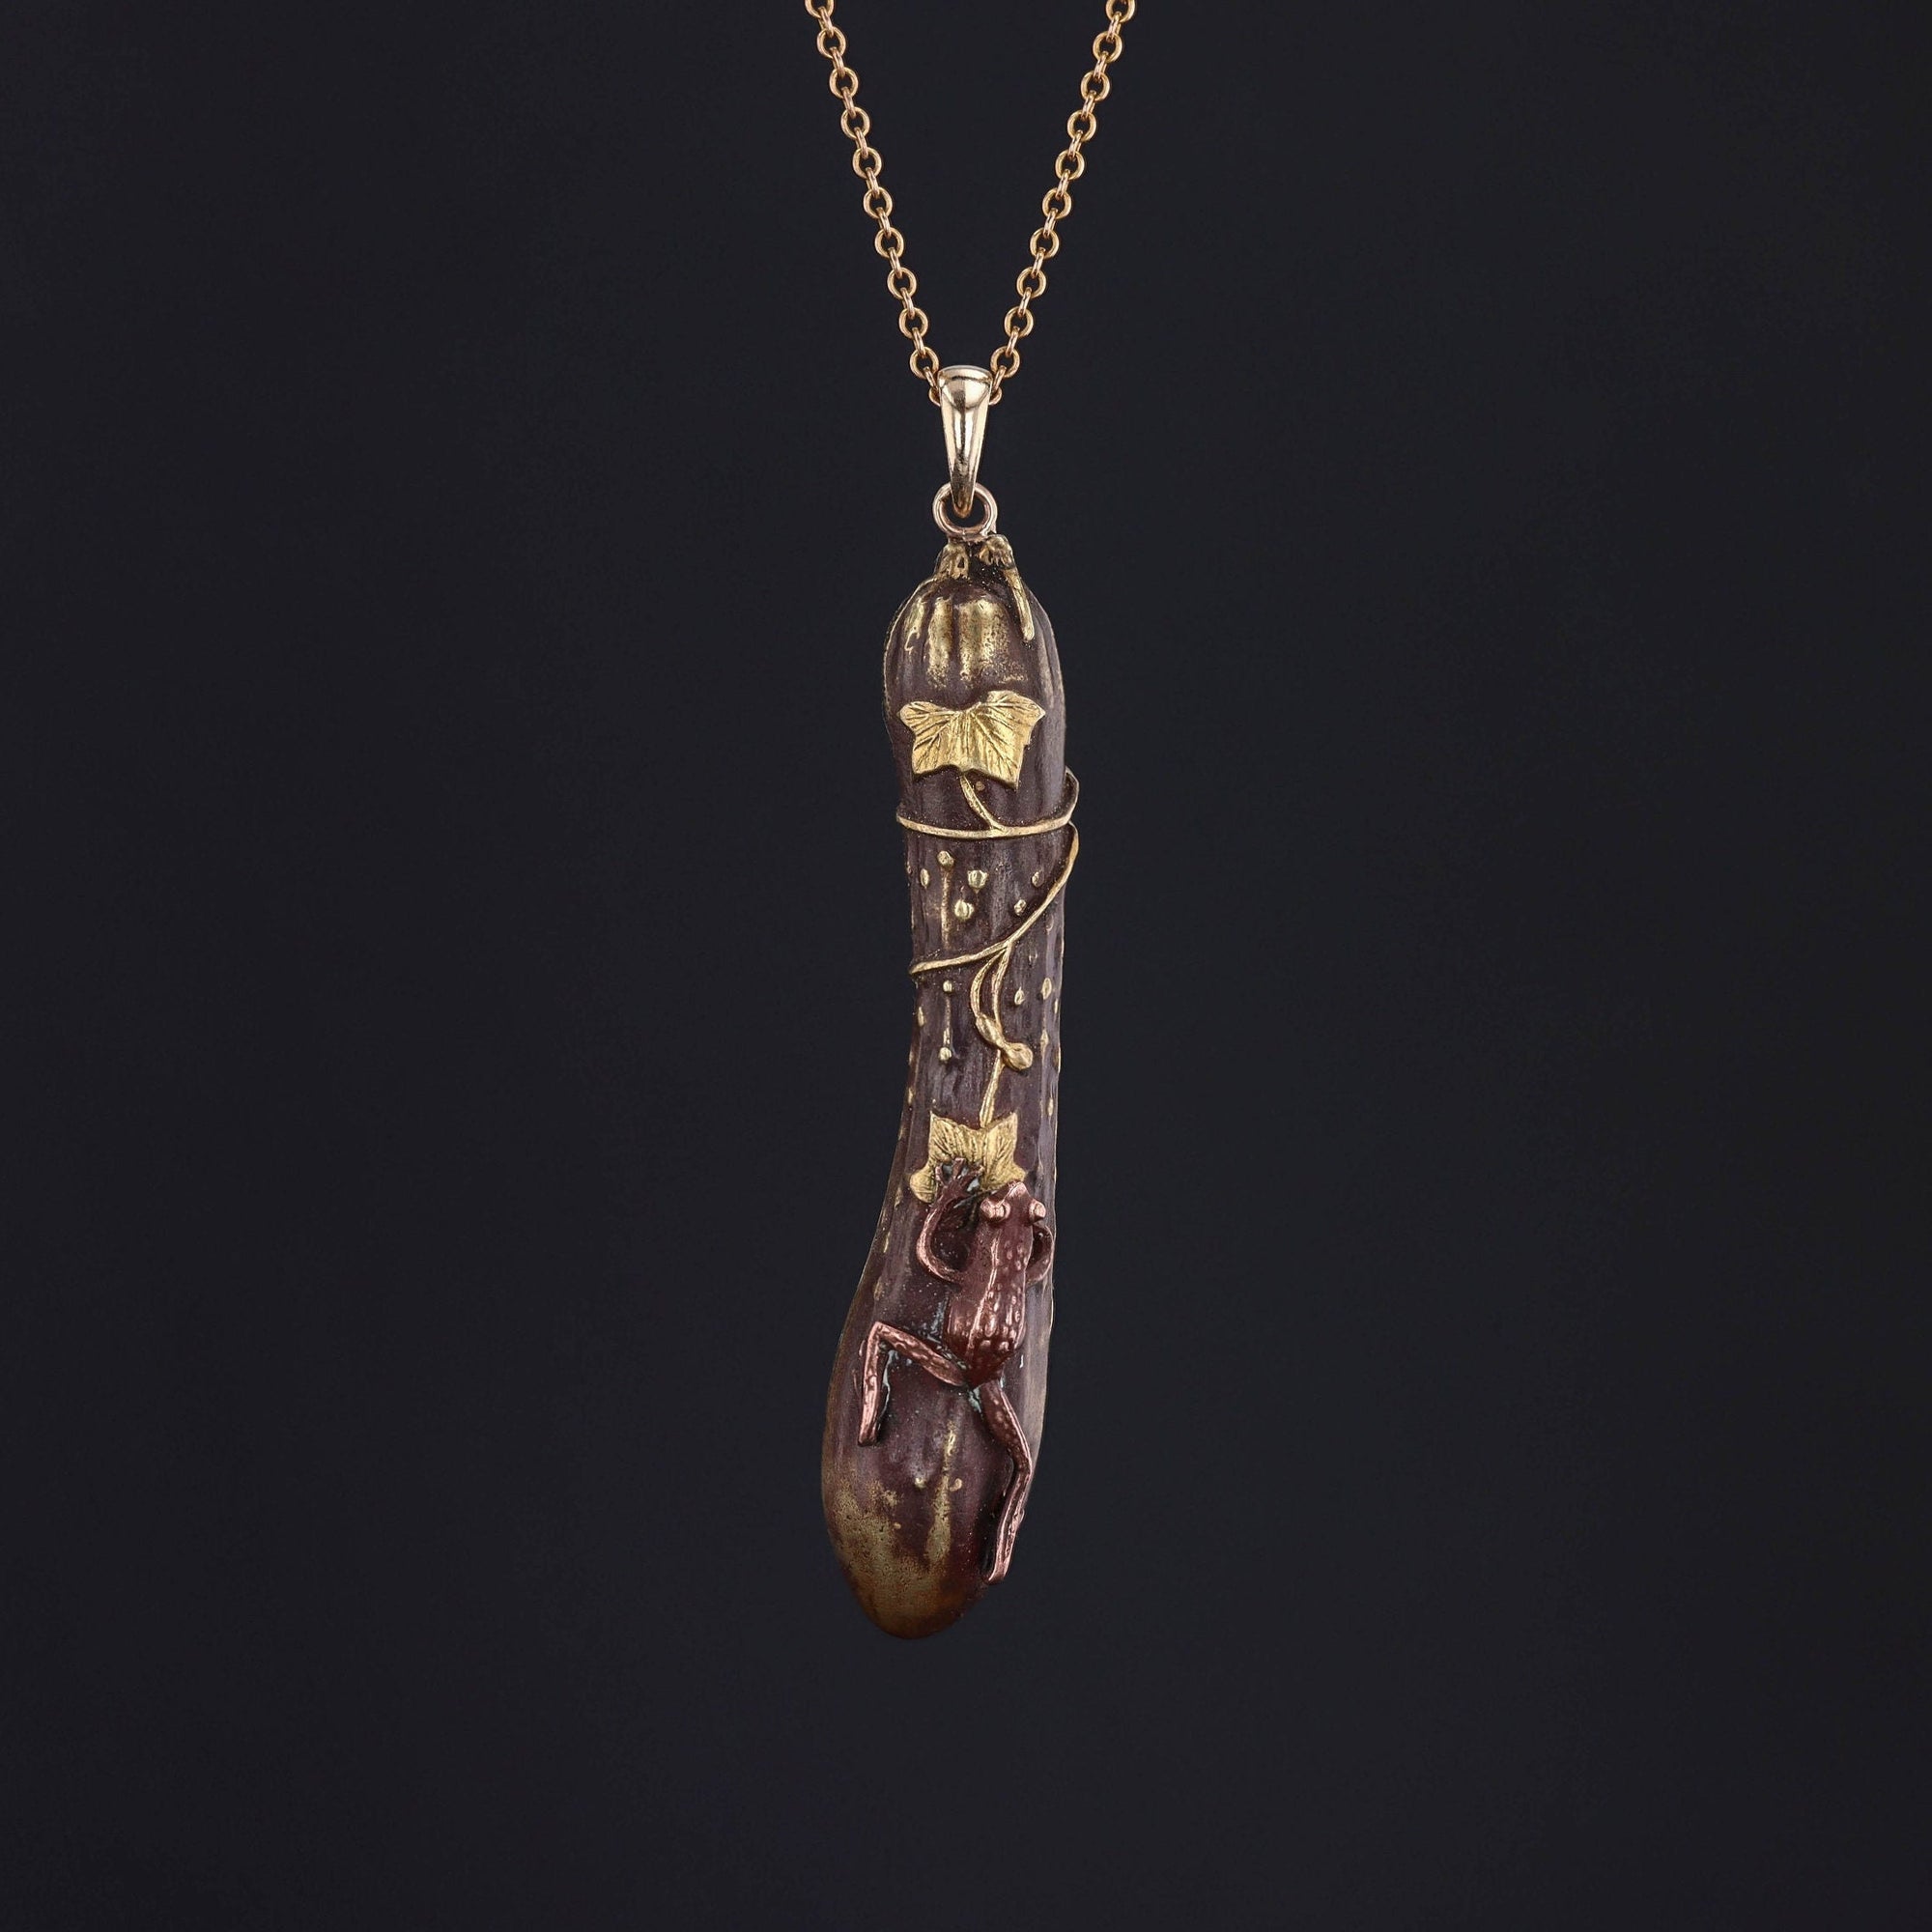 Antique Shakudo Frog Necklace of 14k Gold